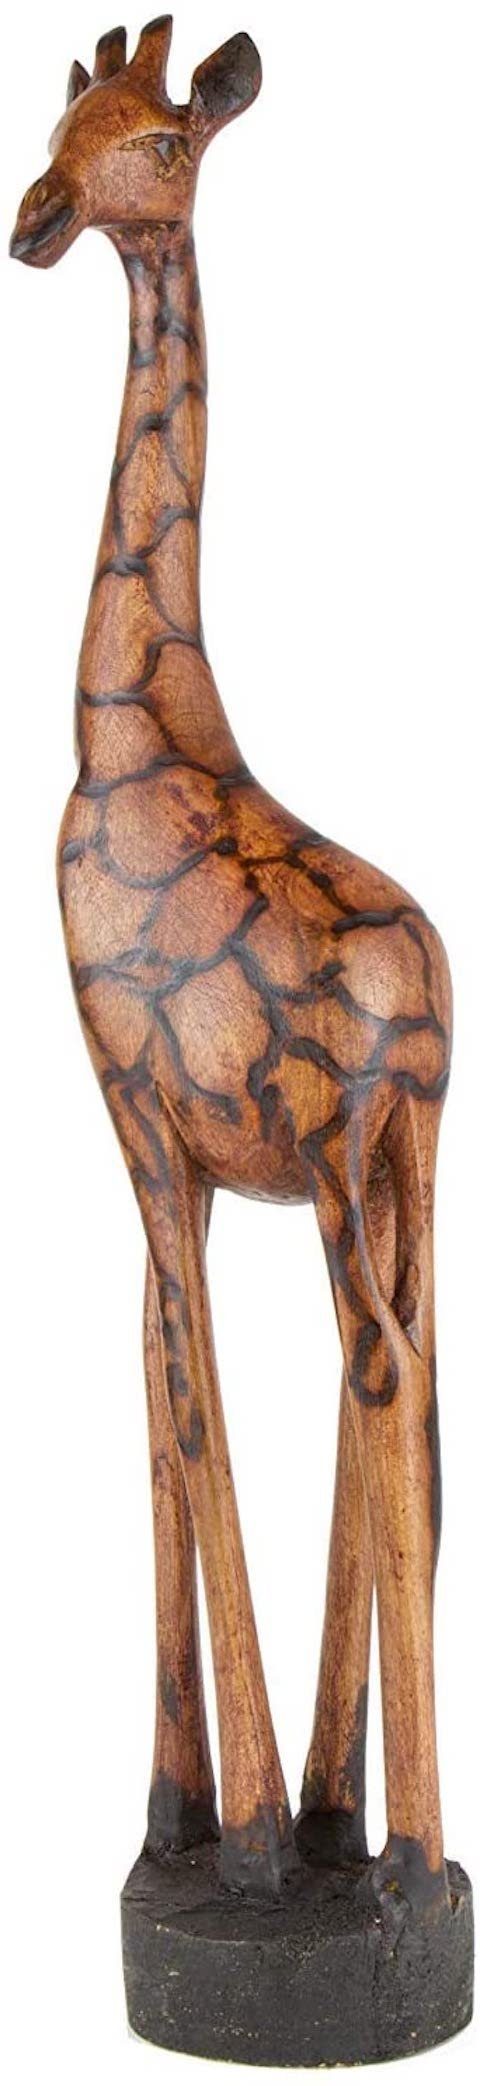 Afrika-Deko Afrikafigur Holzgiraffe Samia Authentische Afrika Deko Einzigartige Holzfigur, Handarbeit aus SIMBABWE sehr hochwertige Holz Giraffe